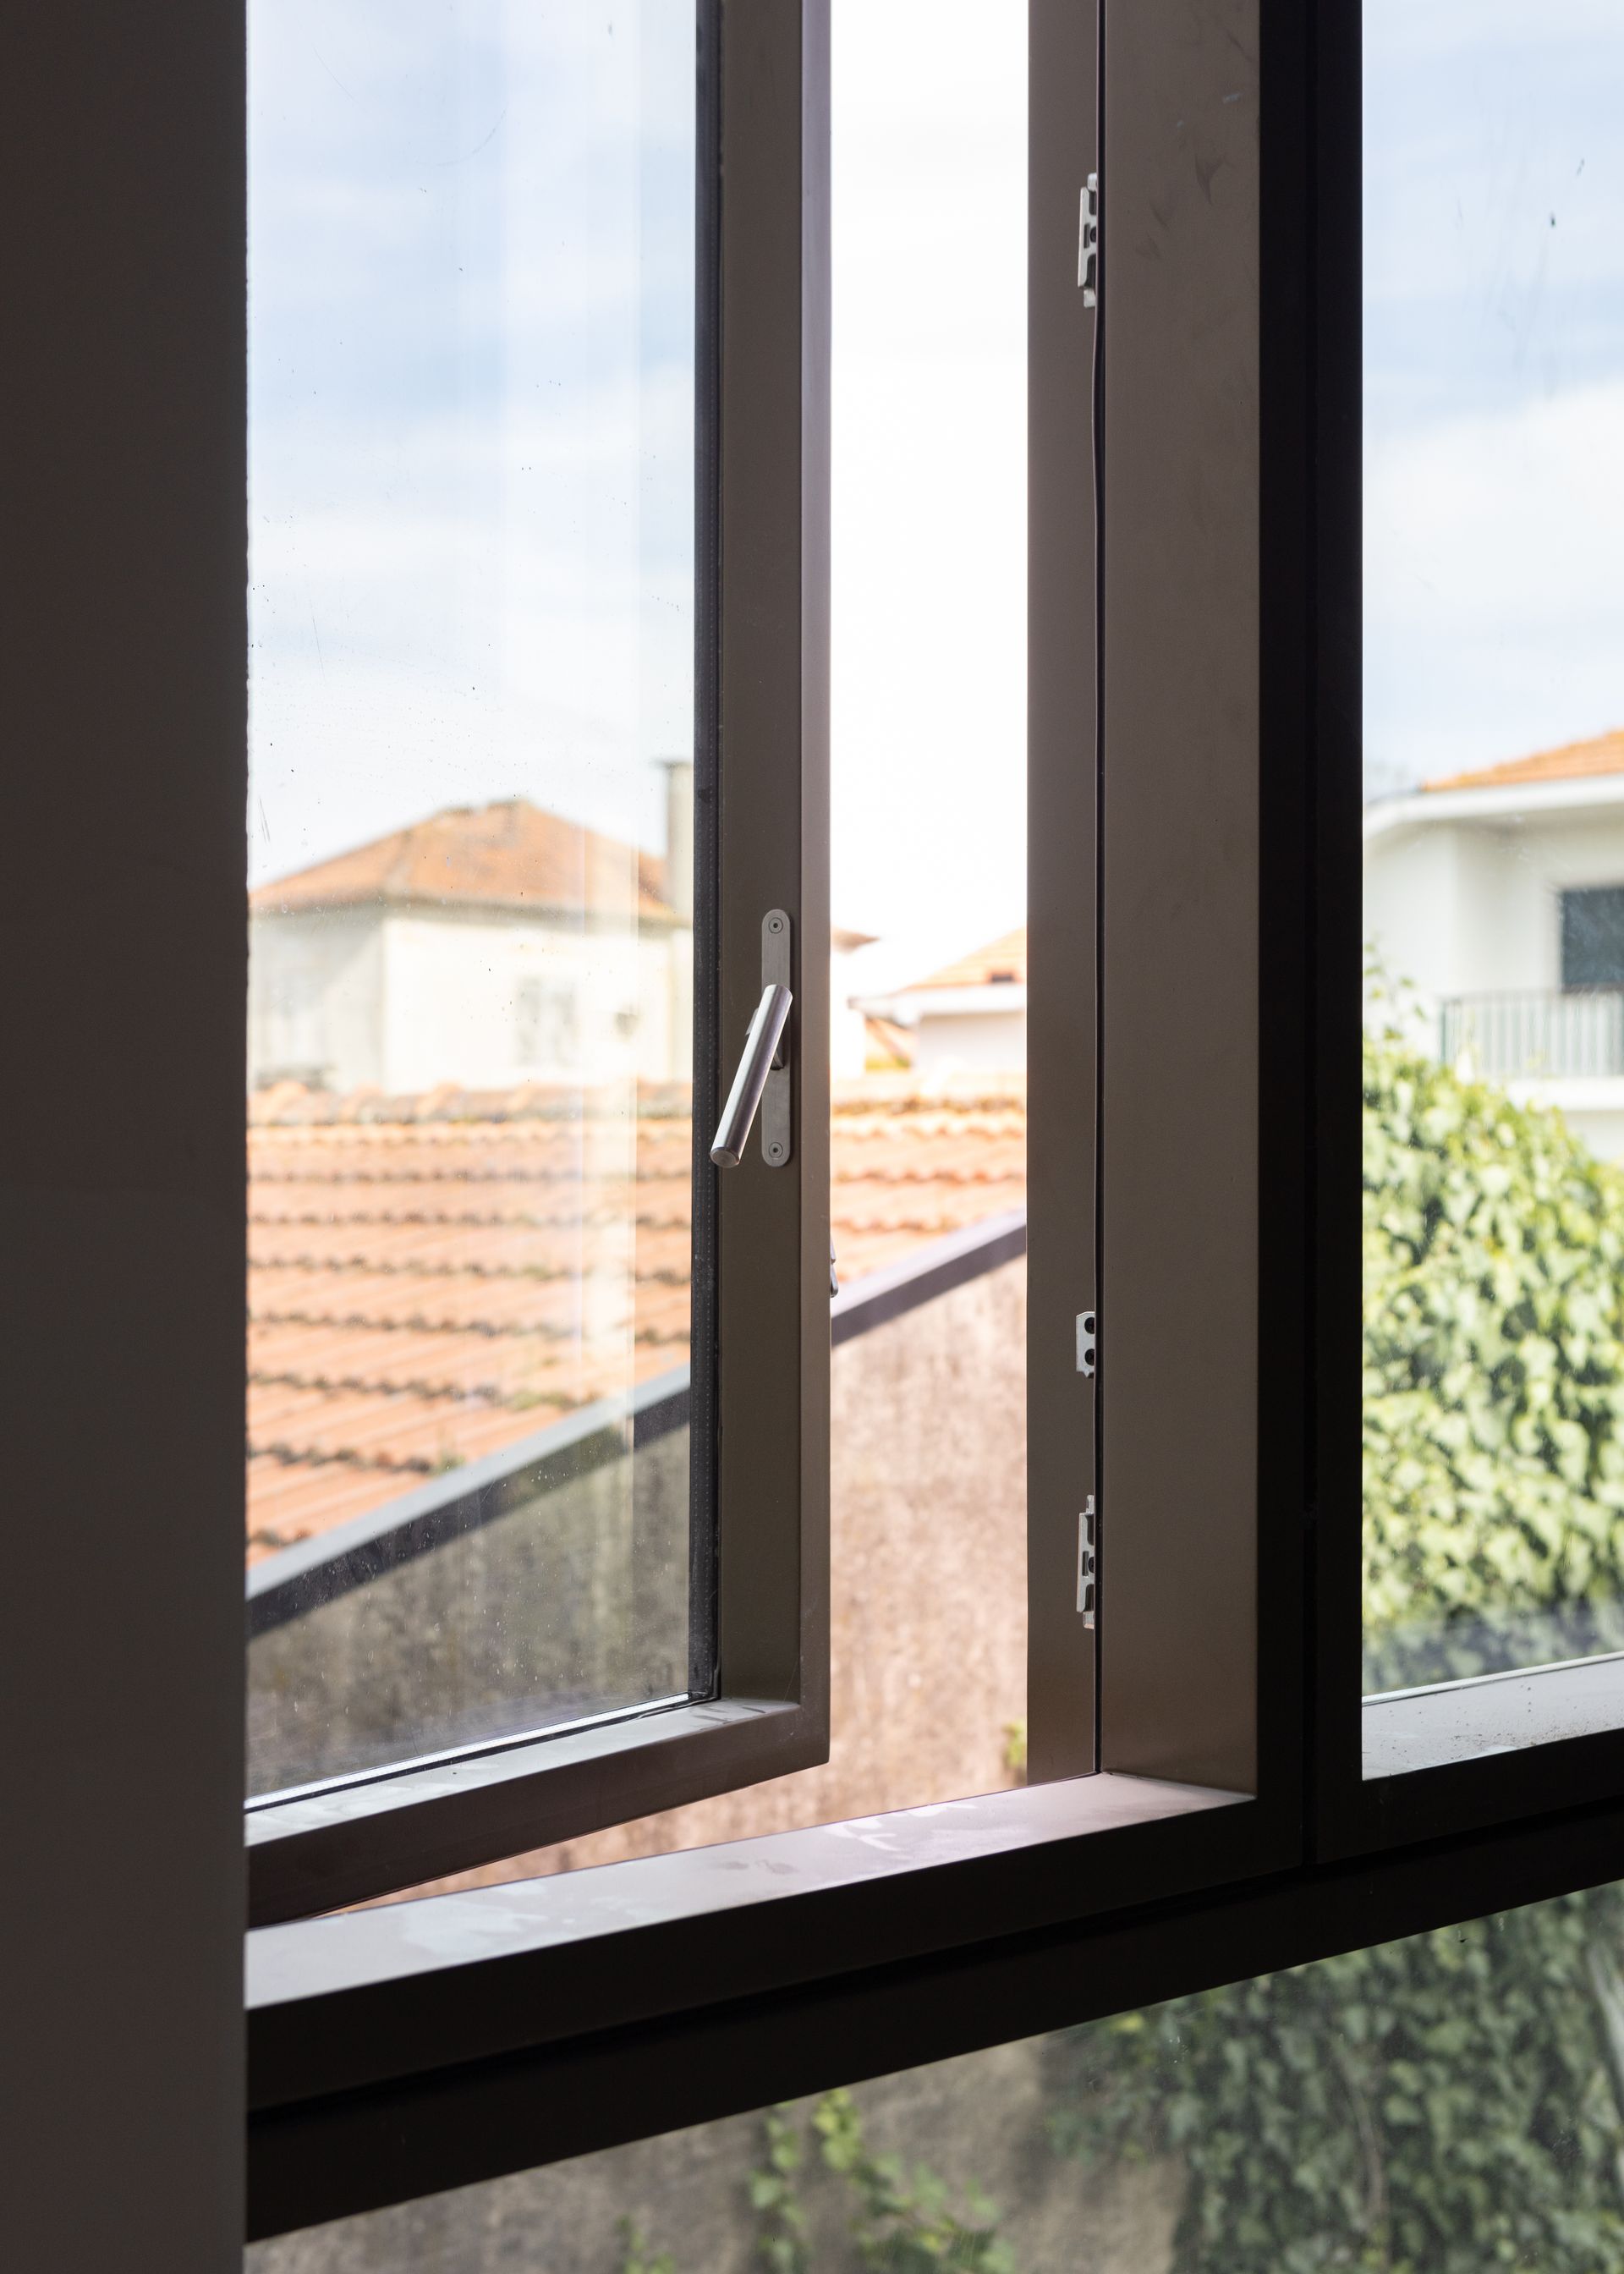 Minimalist window with OTIIMA Larglass in the Marechal 720 project in Porto, Portugal by Correia Ragazzi Arquitectos.